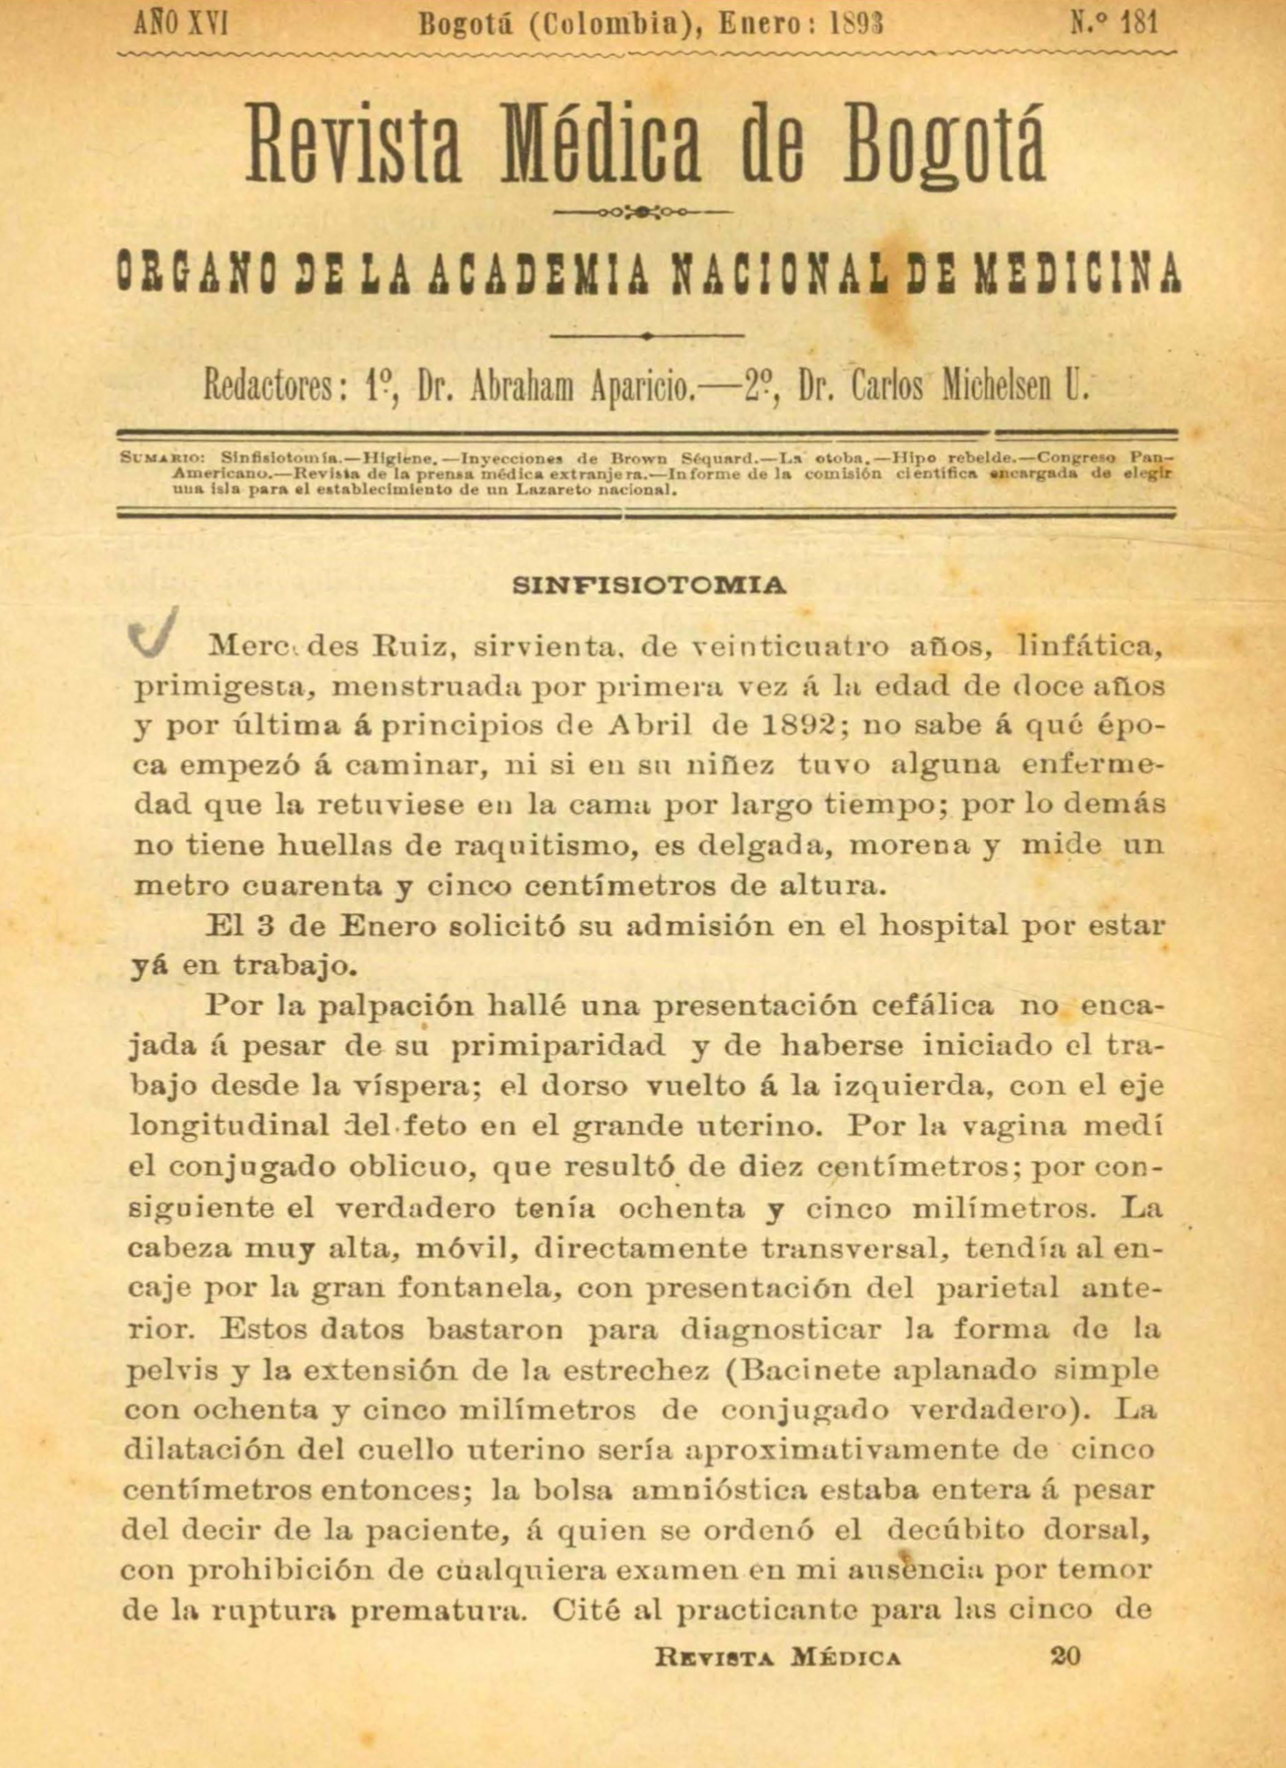 					Ver Vol. 16 Núm. 181 (1893): Revista Médica de Bogotá. Serie 16. Enero de 1893. Núm. 181
				